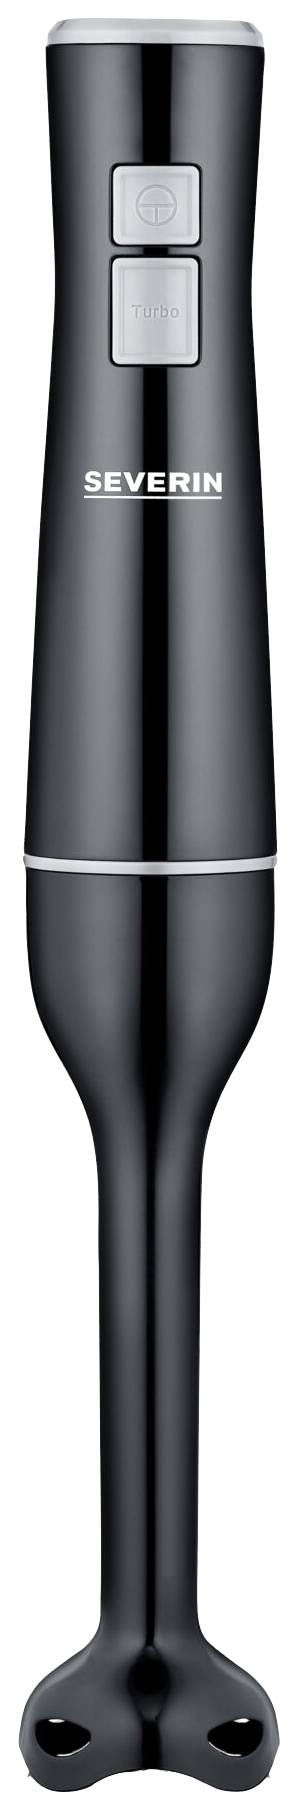 SEVERIN SM 3770 (schwarz/grau)